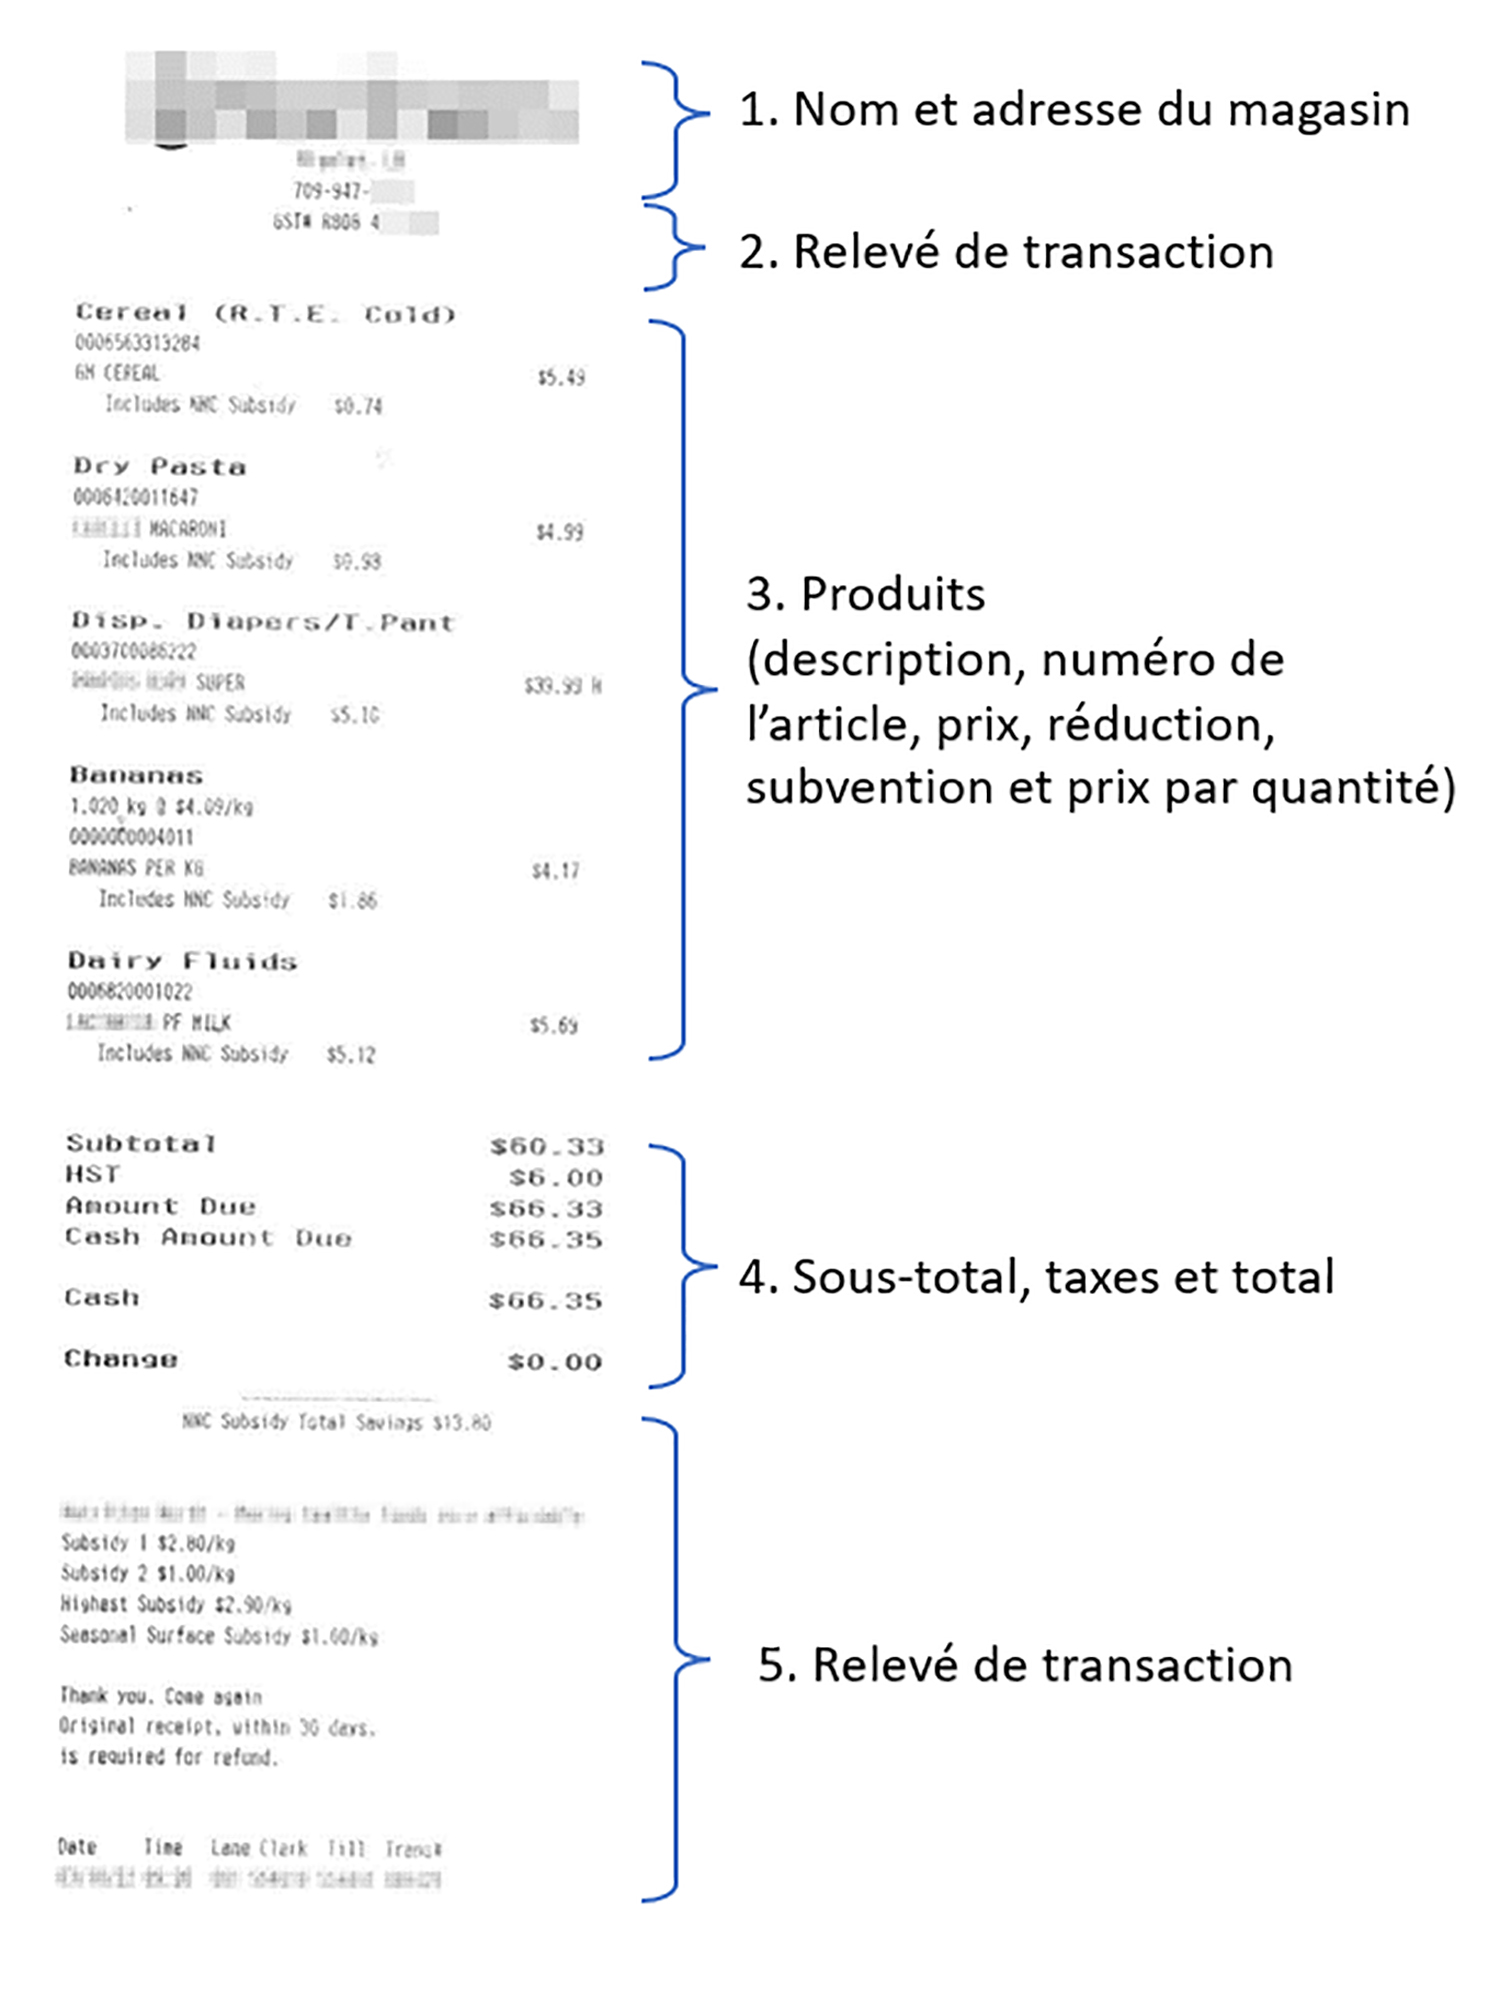 Figure 2 : Présentation du reçu